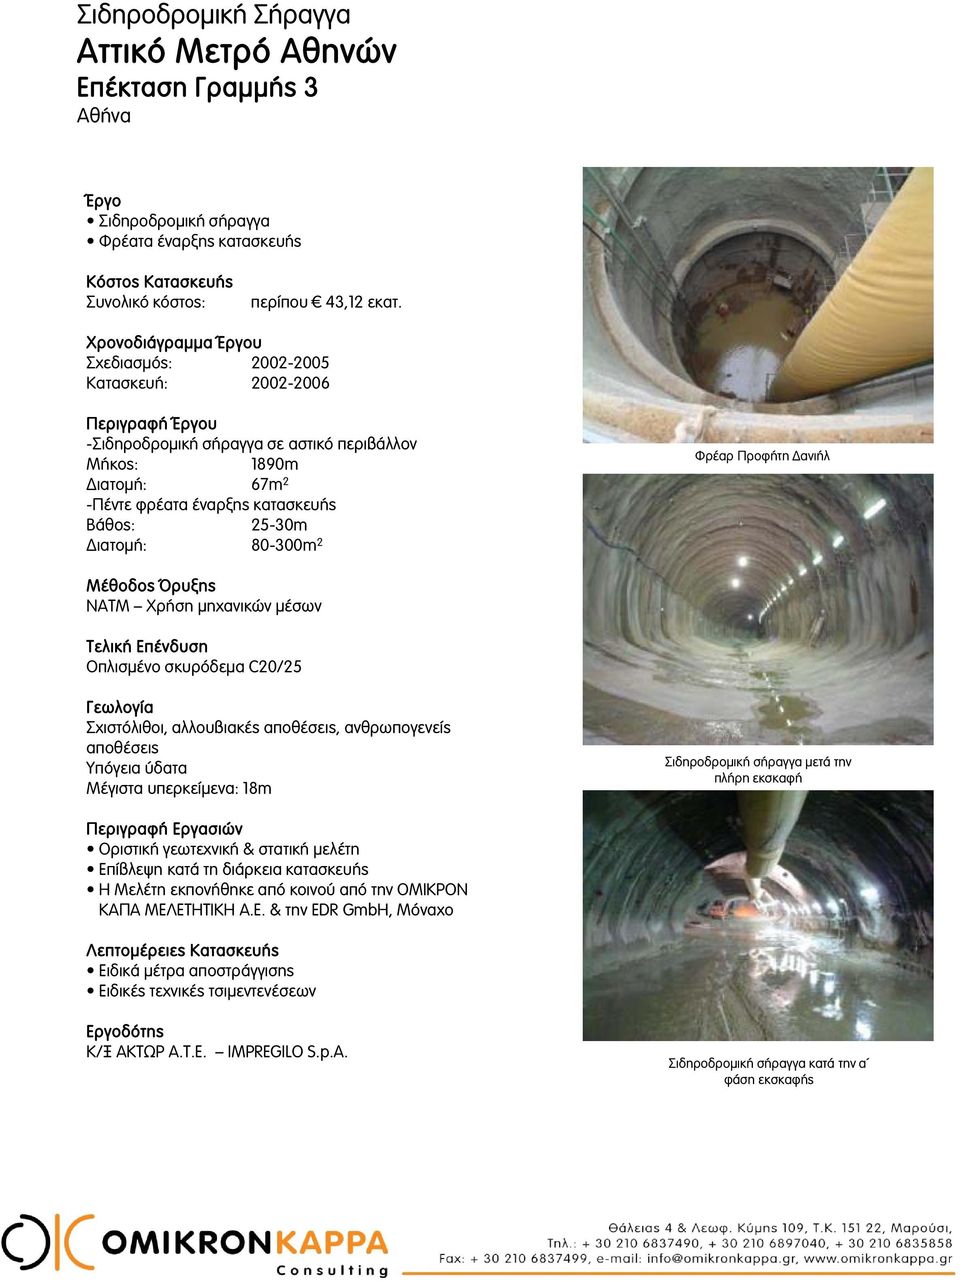 80-300m 2 Φρέαρ Προφήτη Δανιήλ Μέθοδος Όρυξης NATM Χρήση μηχανικών μέσων Τελική Επένδυση Οπλισμένο σκυρόδεμα C20/25 Σχιστόλιθοι, αλλουβιακές αποθέσεις, ανθρωπογενείς αποθέσεις Υπόγεια ύδατα Μέγιστα